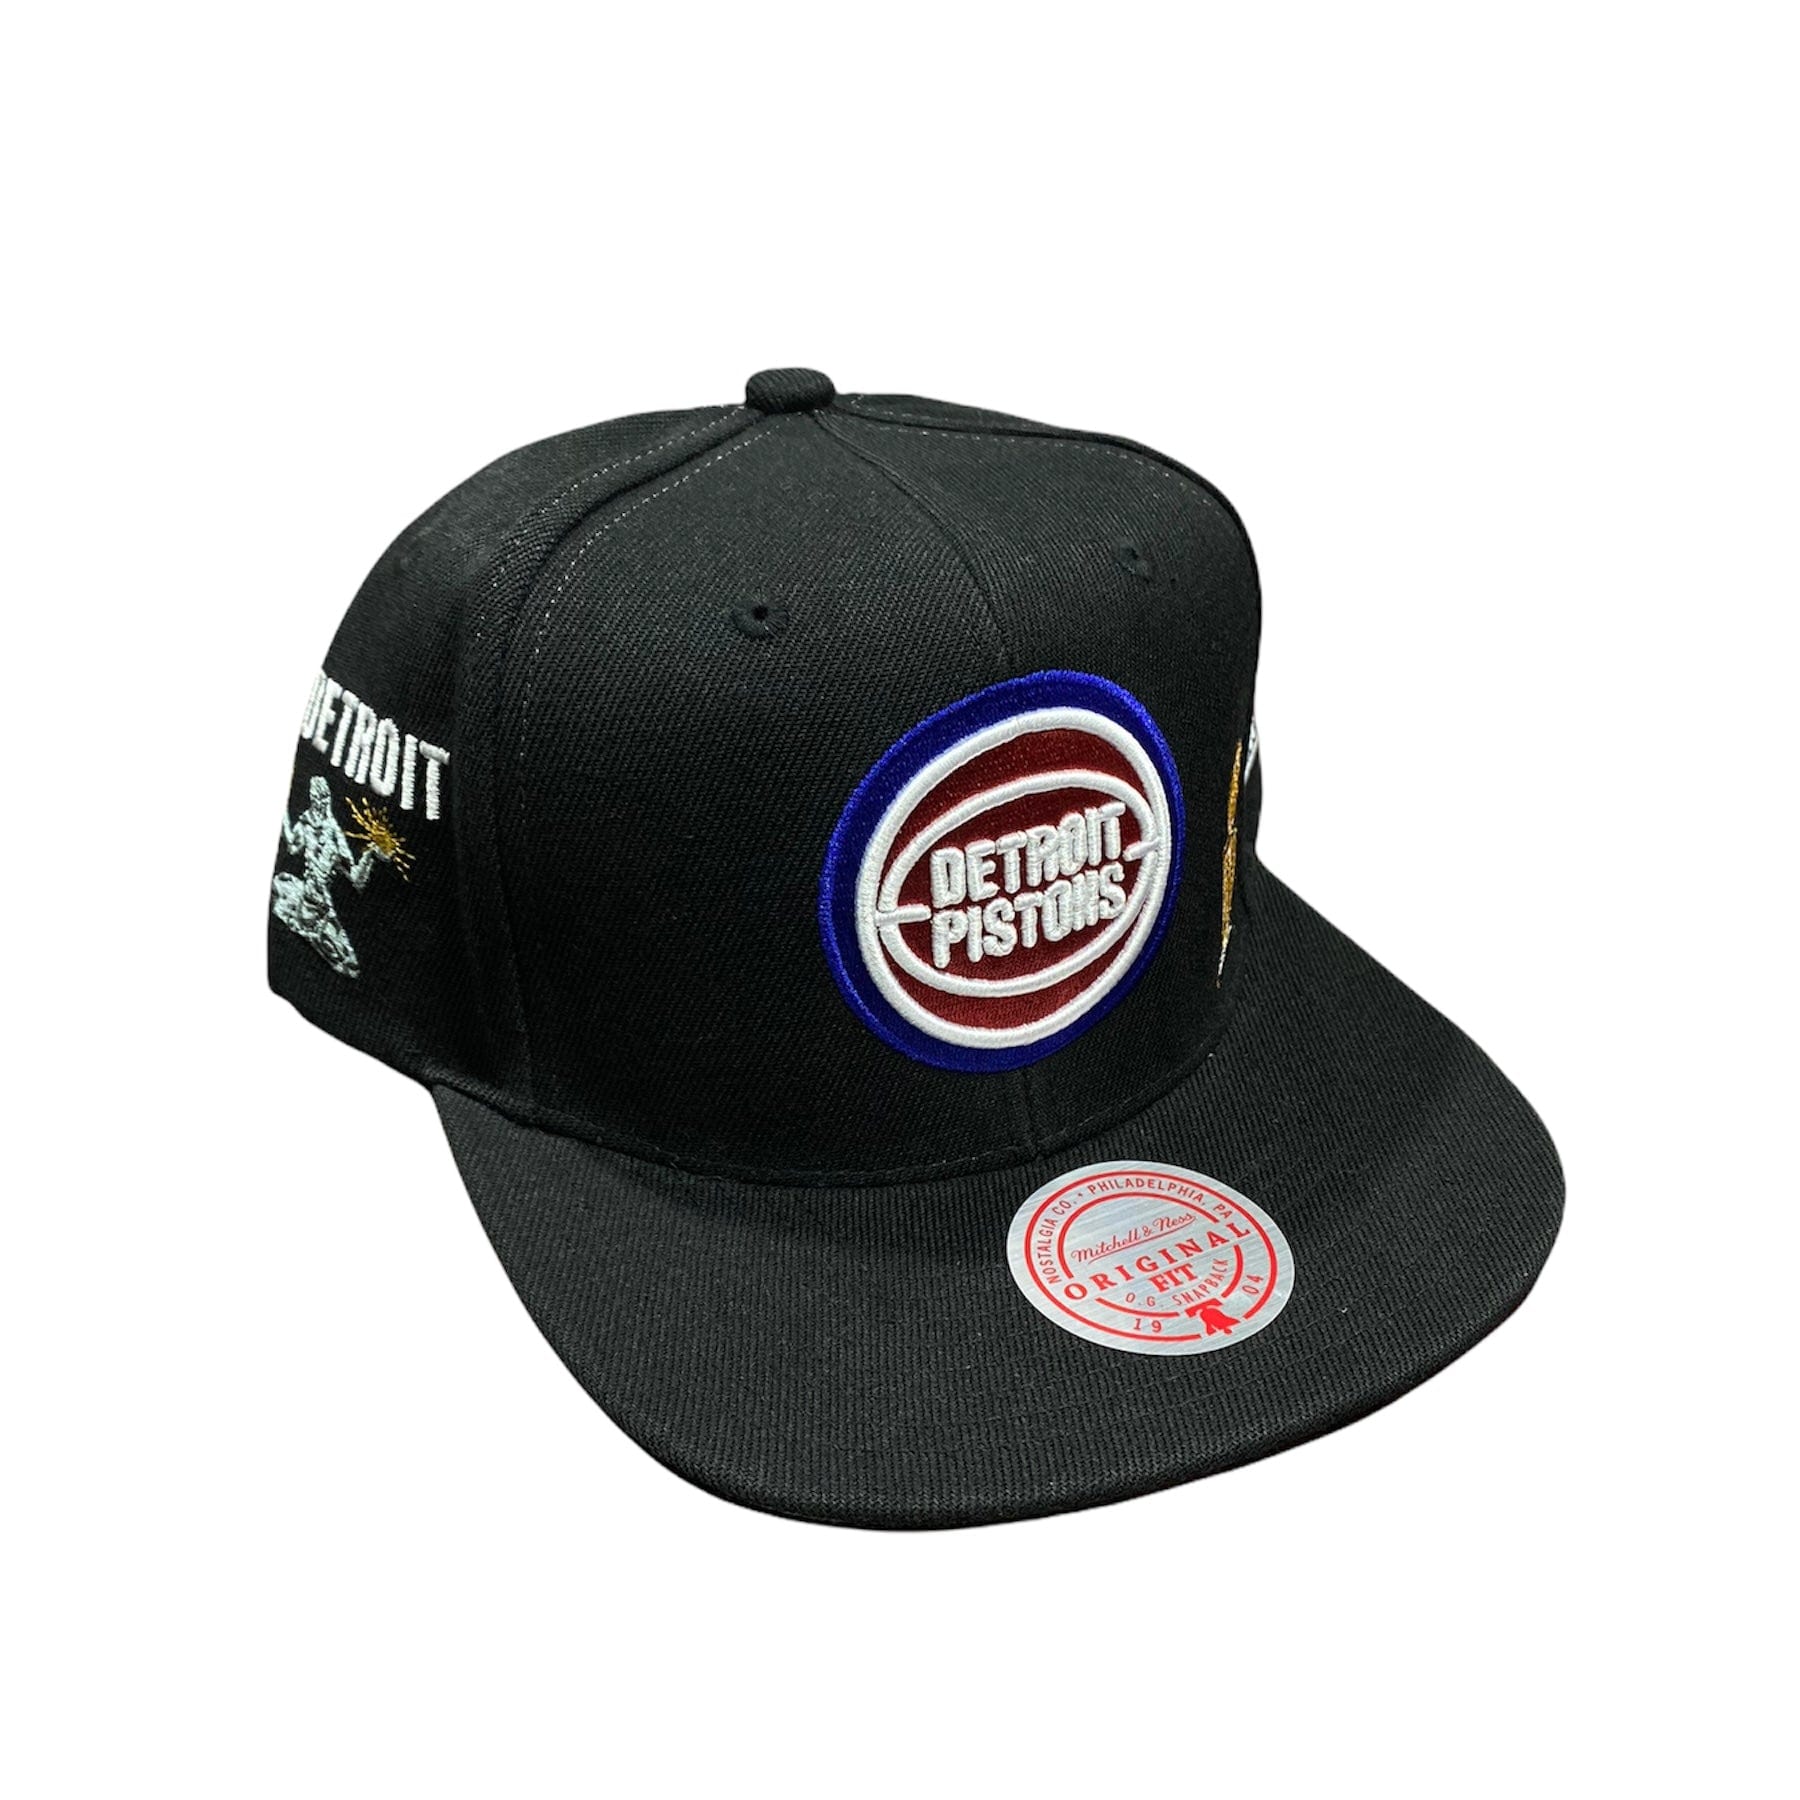 MITCHELL & NESS - Detroit Pistons Hat